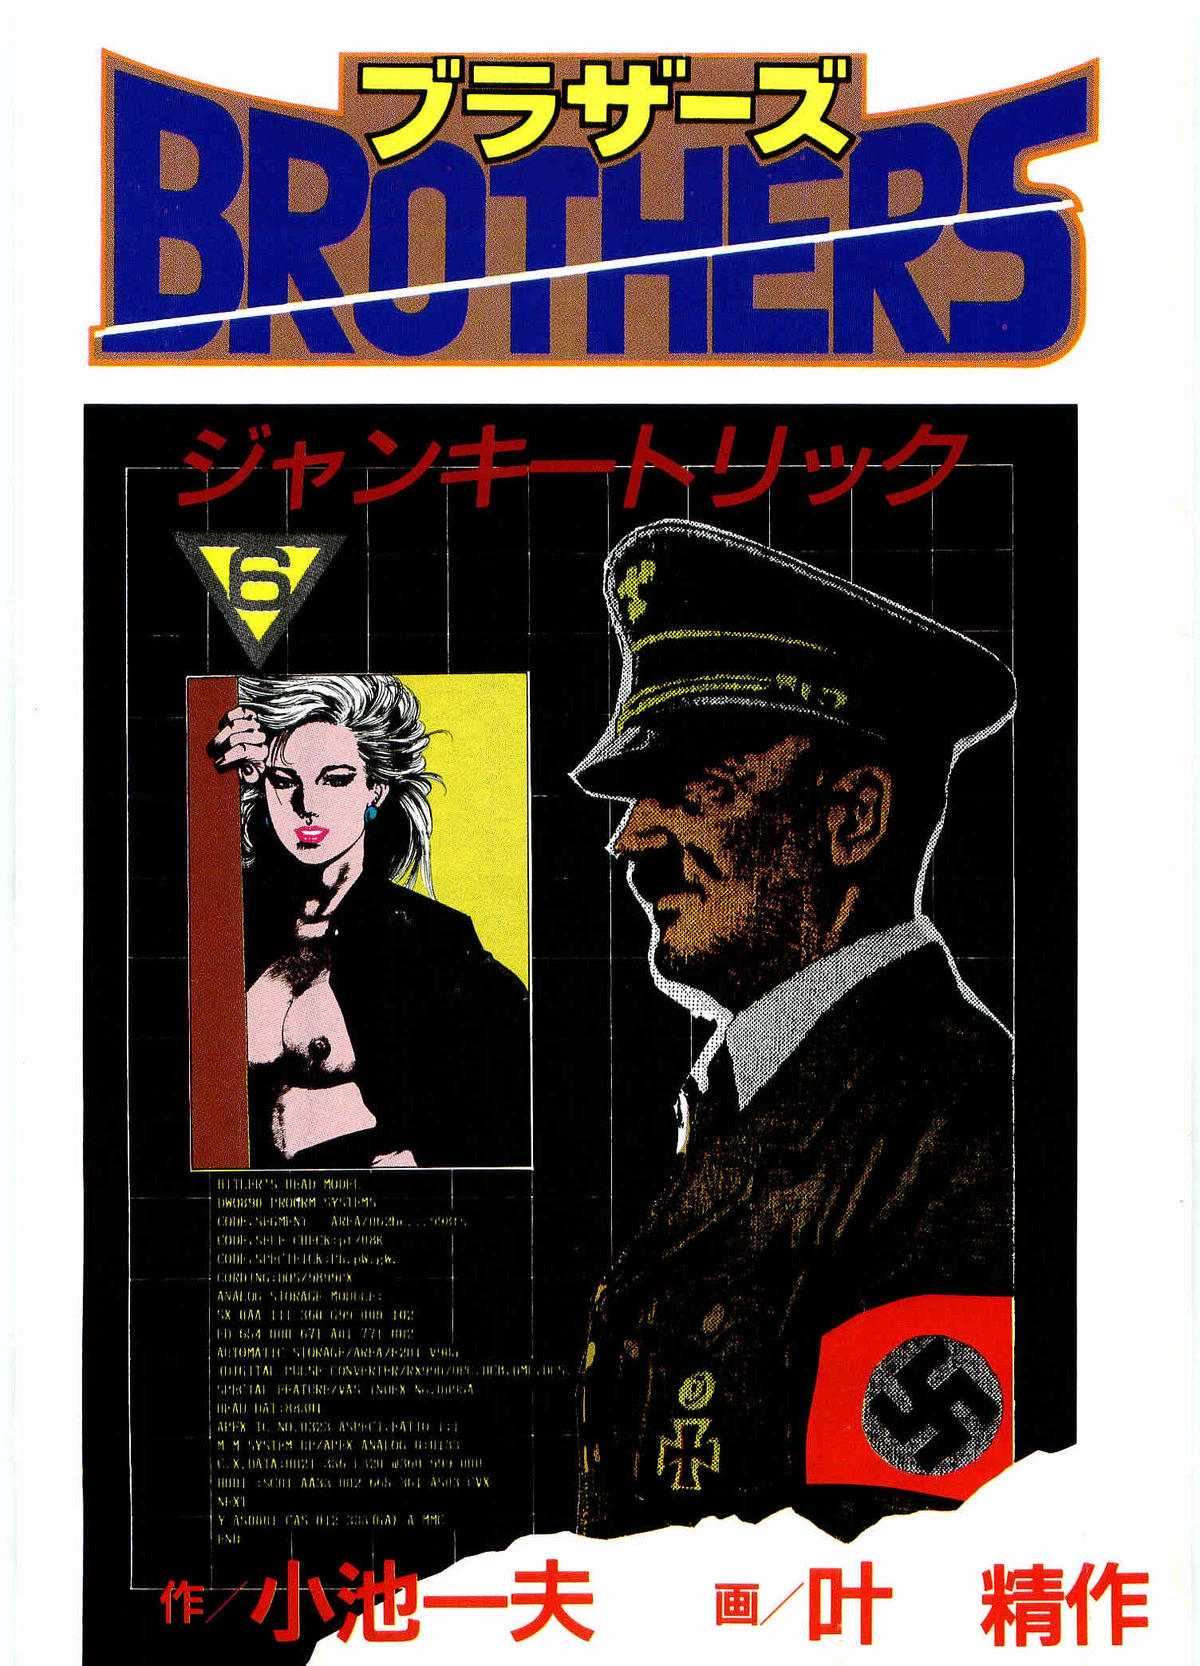 [Koike Kazuo, Kanou Seisaku] BROTHERS 06(JAP) [小池一夫&times;叶精作] BROTHERS 06(JAP)